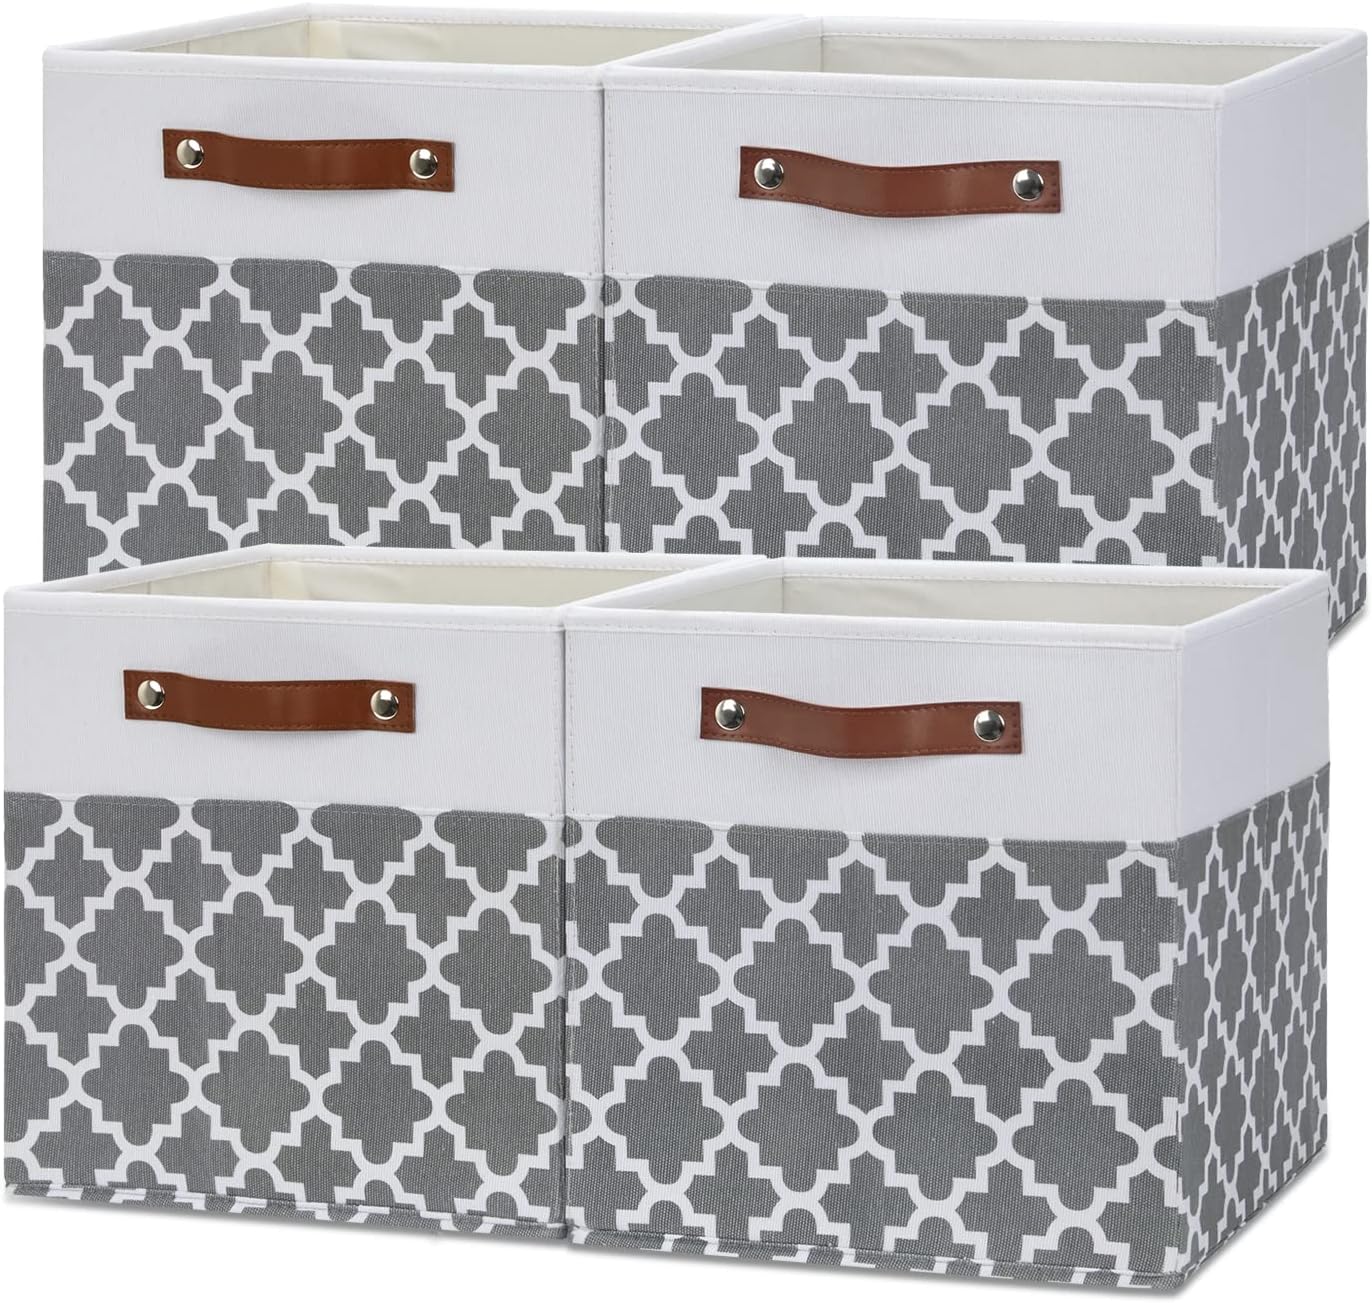 Temary 12x12x12 Storage Cubes Storage Bins 4 Pack Fabric Storage Bins with Leather Handle, Foldable Cubes Storage Box Baskets for Closet, Shelf, Nursery (White&Lattice)